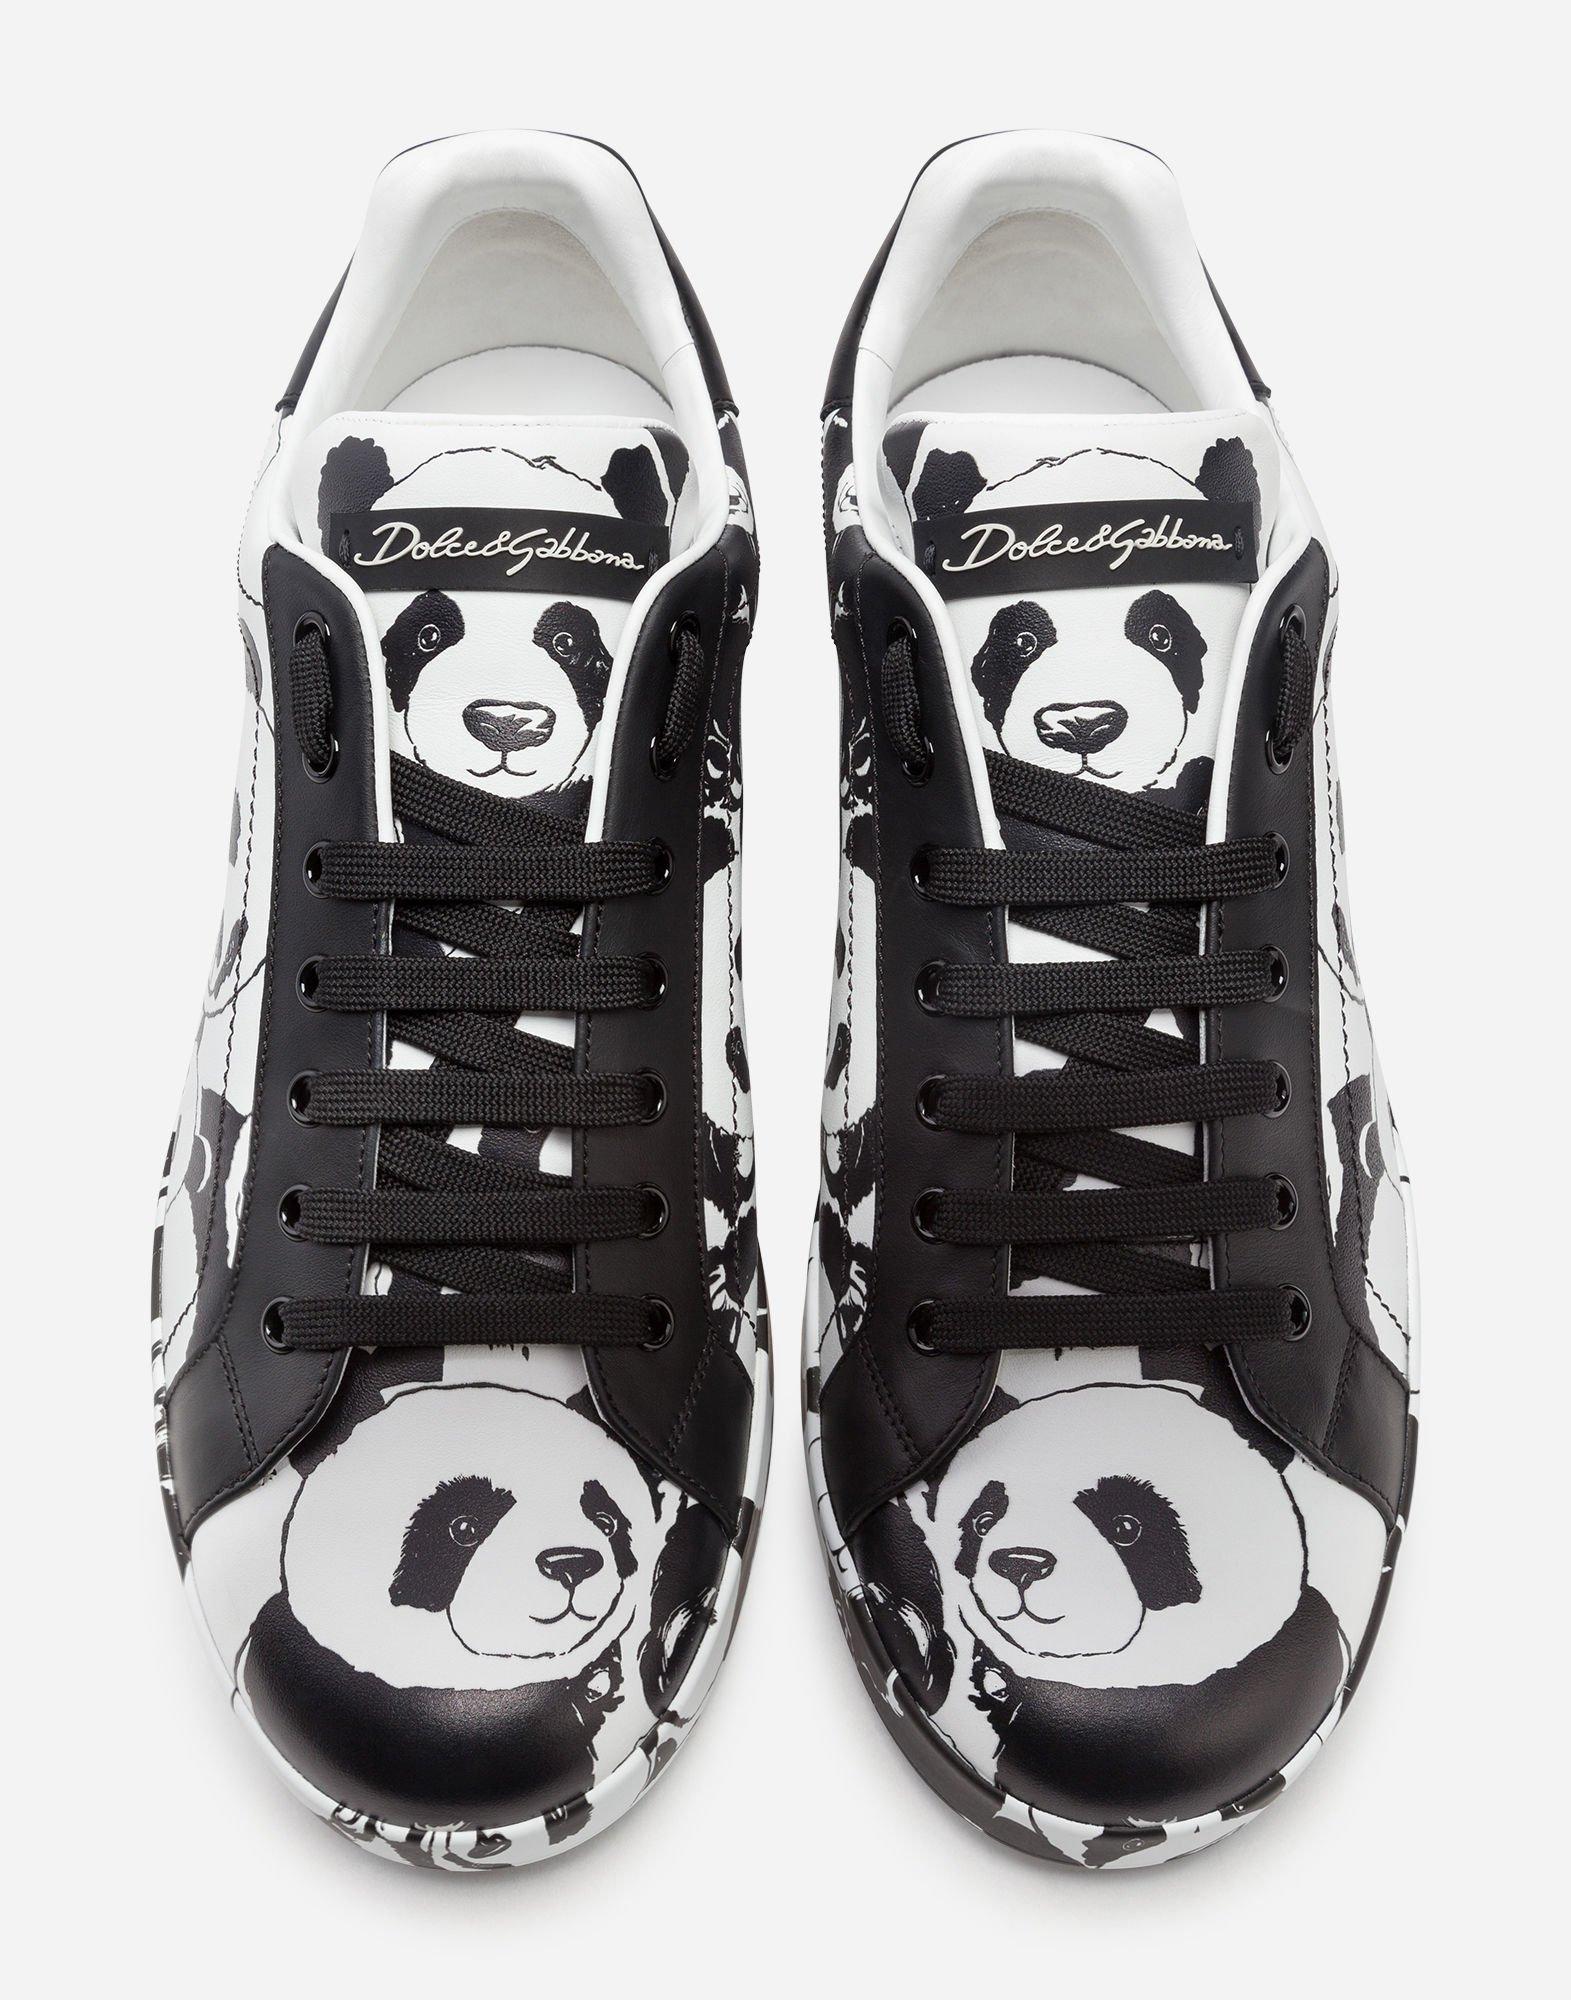 dolce gabbana panda shoes